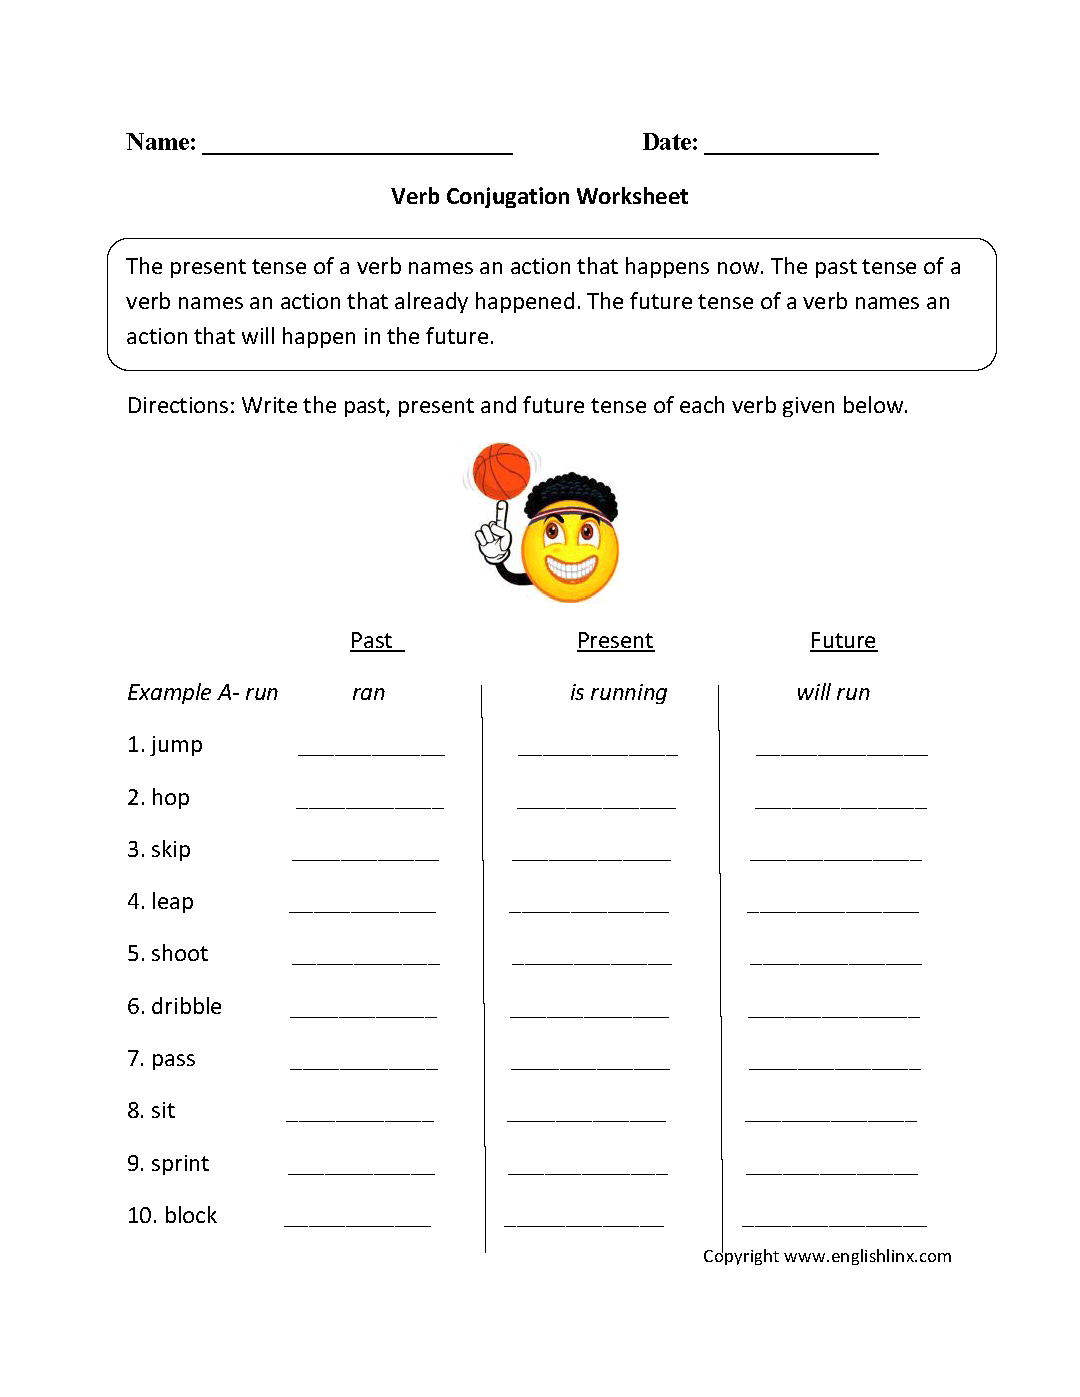 verb-worksheets-guruparents